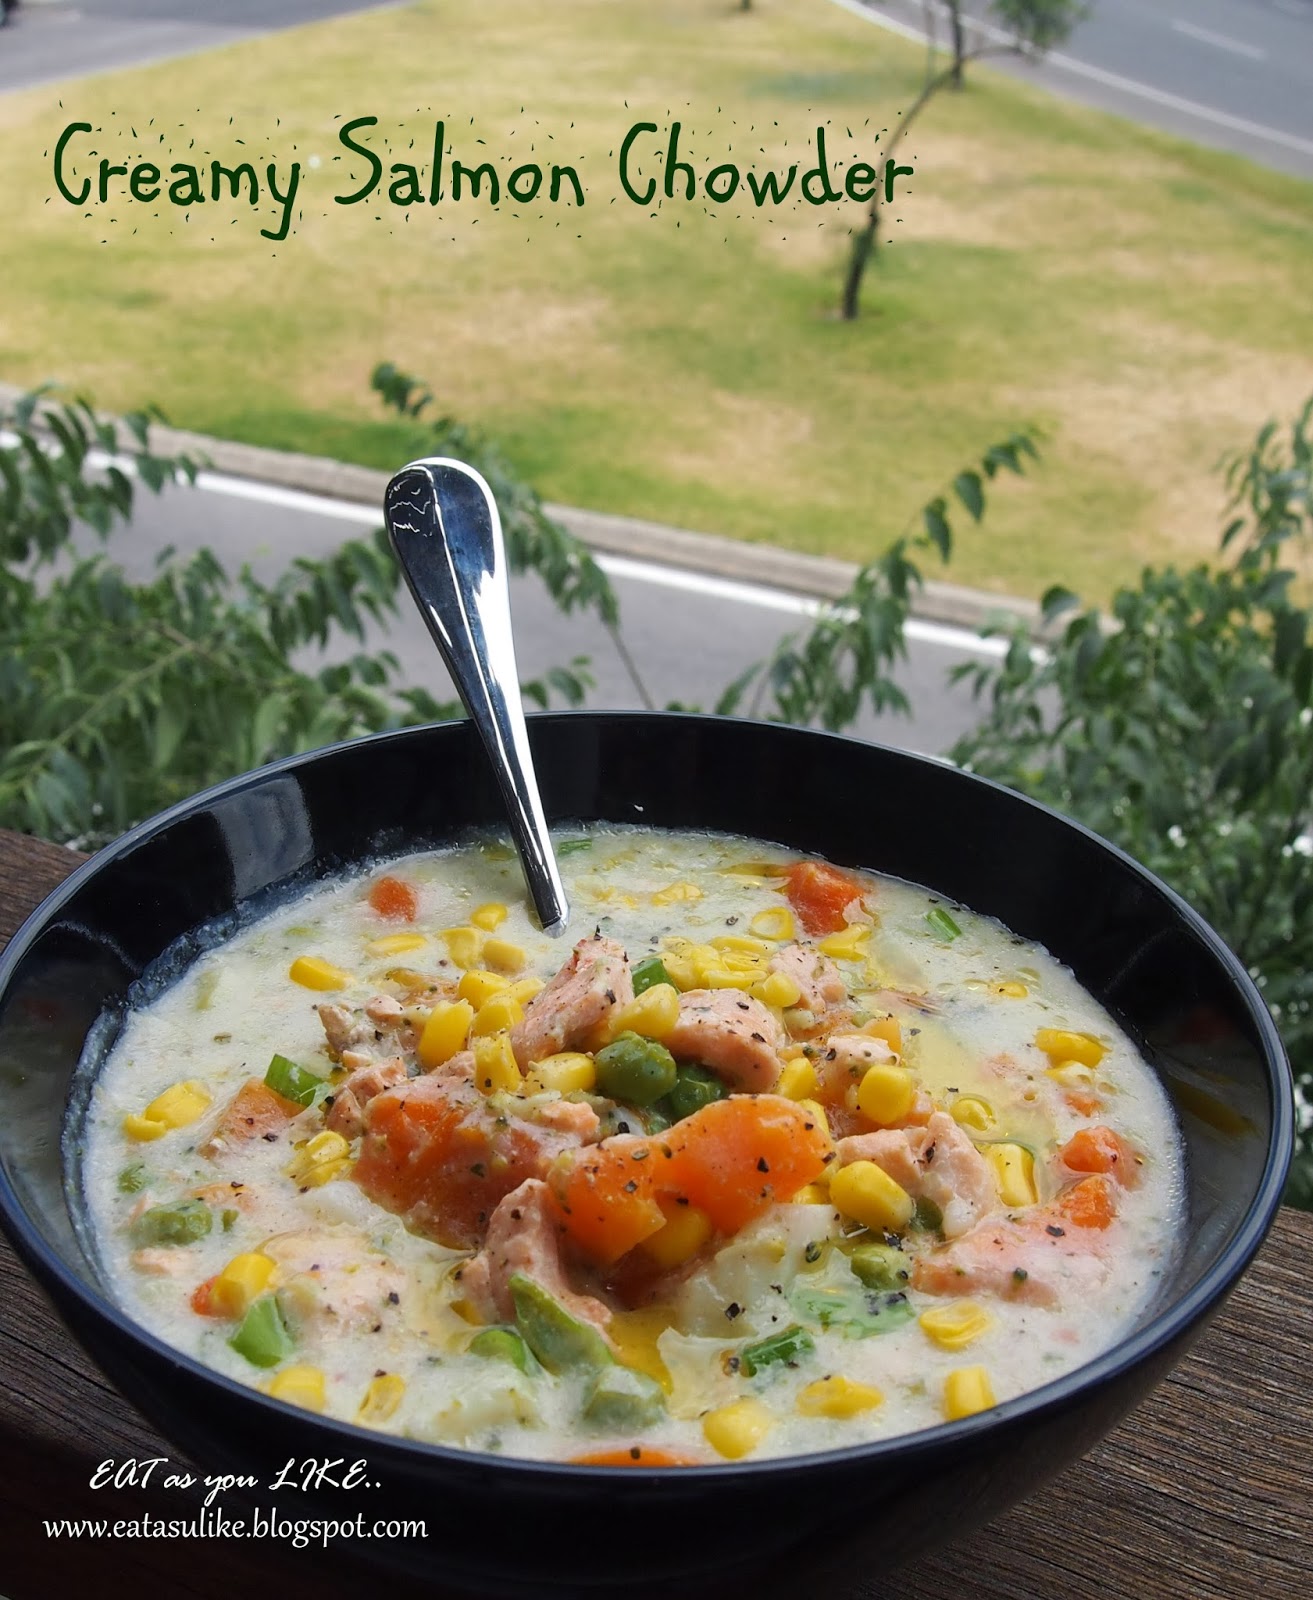 http://eatasulike.blogspot.com.au/2014/03/creamy-salmon-chowder.html